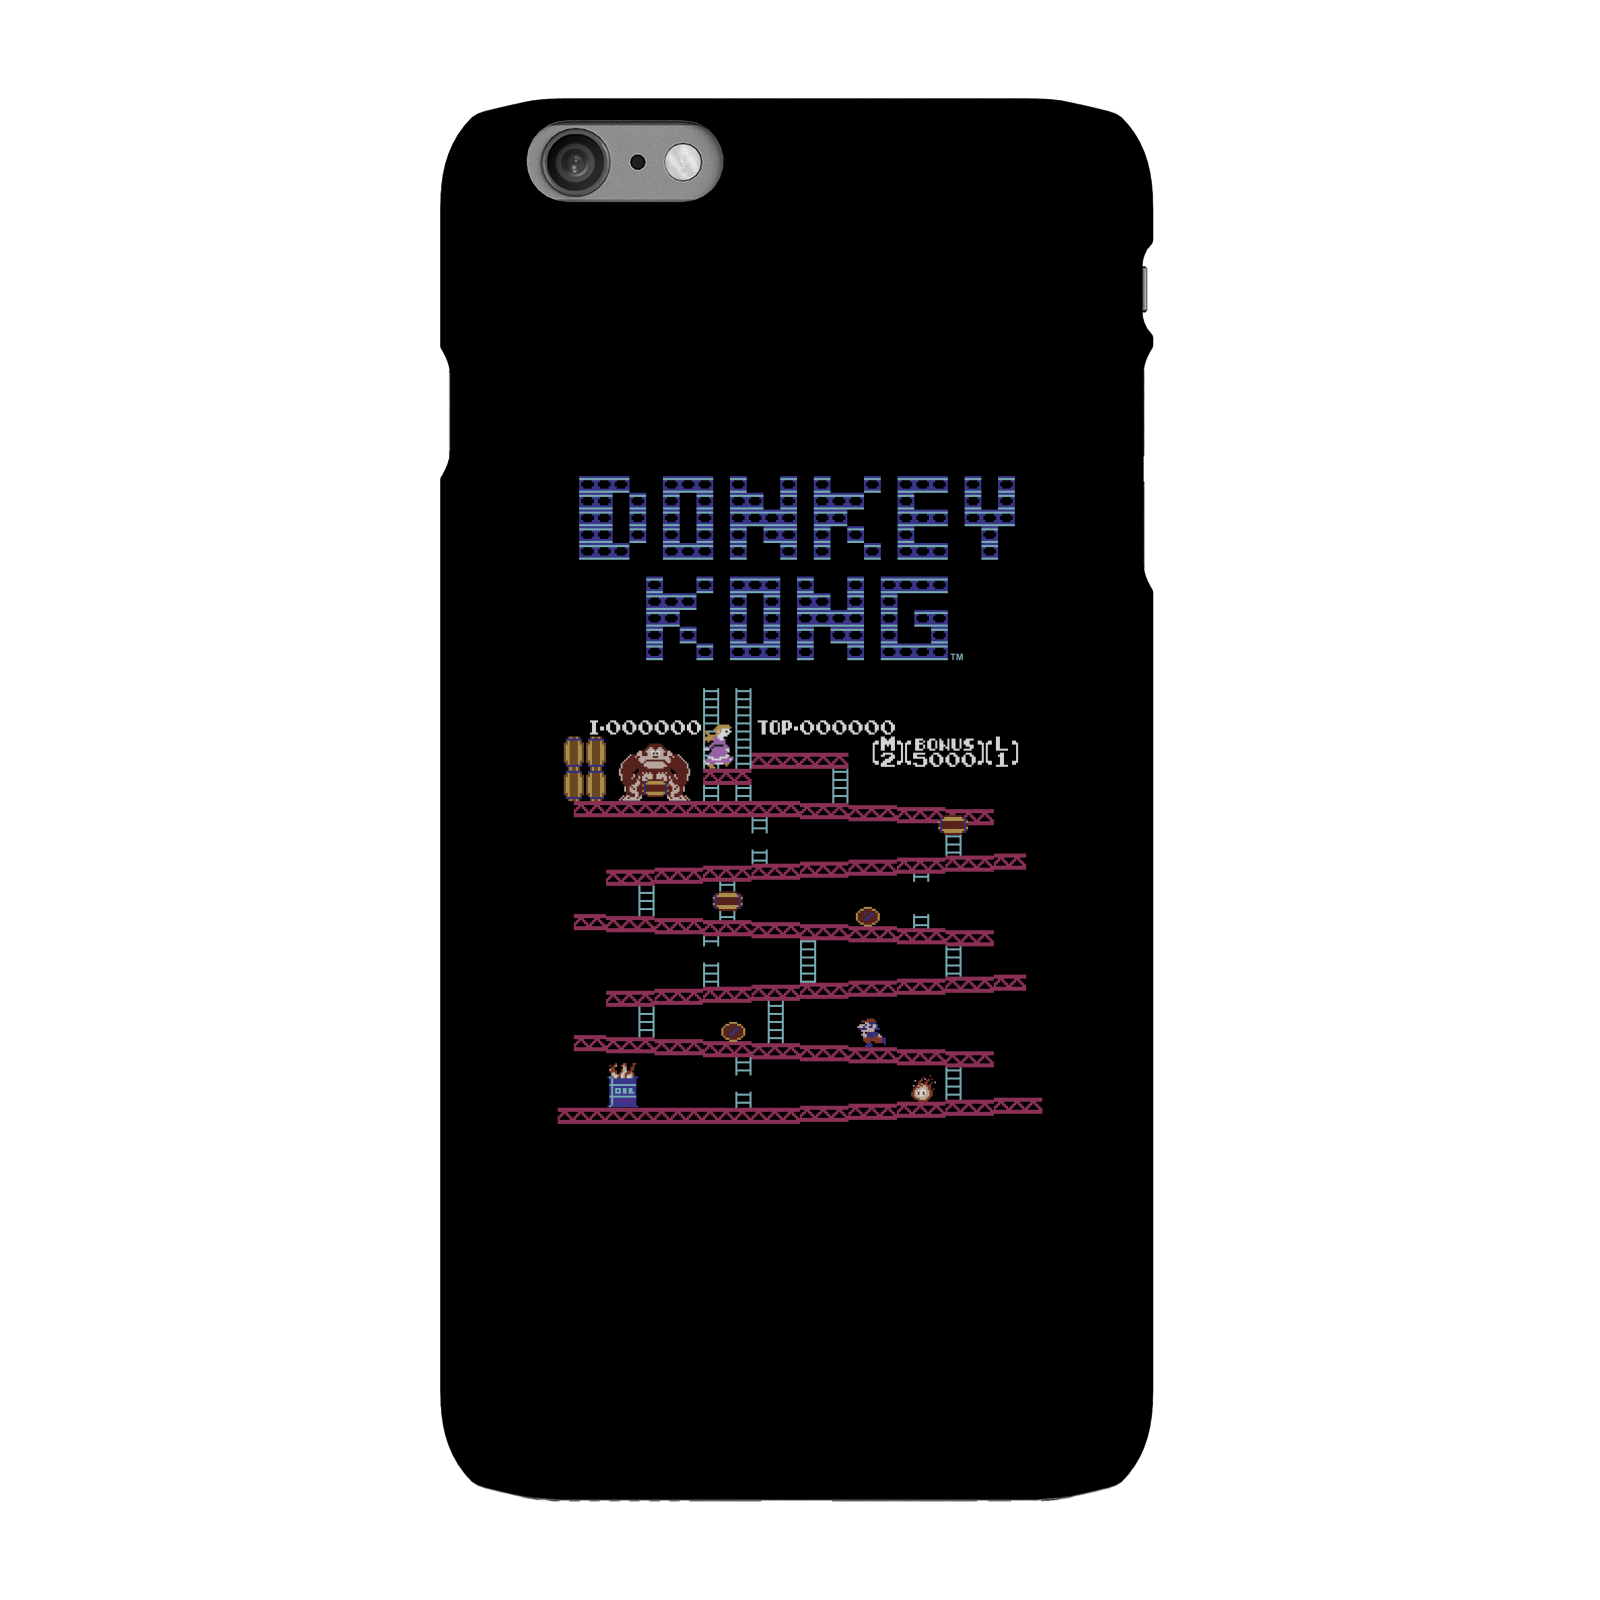 Nintendo Donkey Kong Retro Phone Case - iPhone 6 Plus - Snap Case - Matte